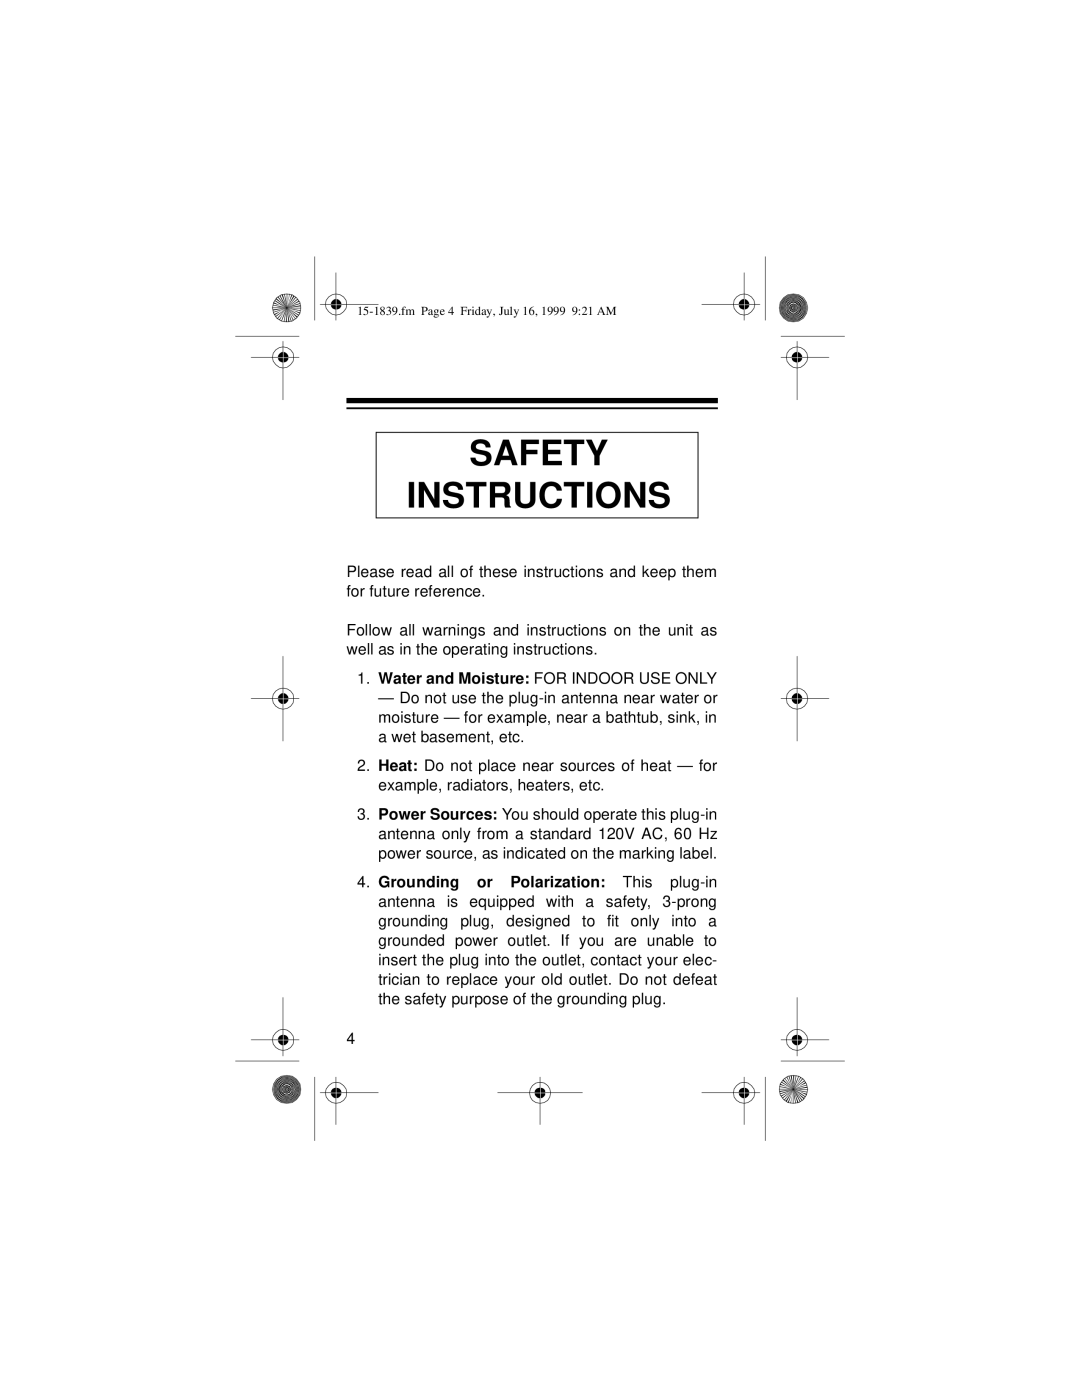 Radio Shack TV ANTENNA owner manual Safety Instructions 